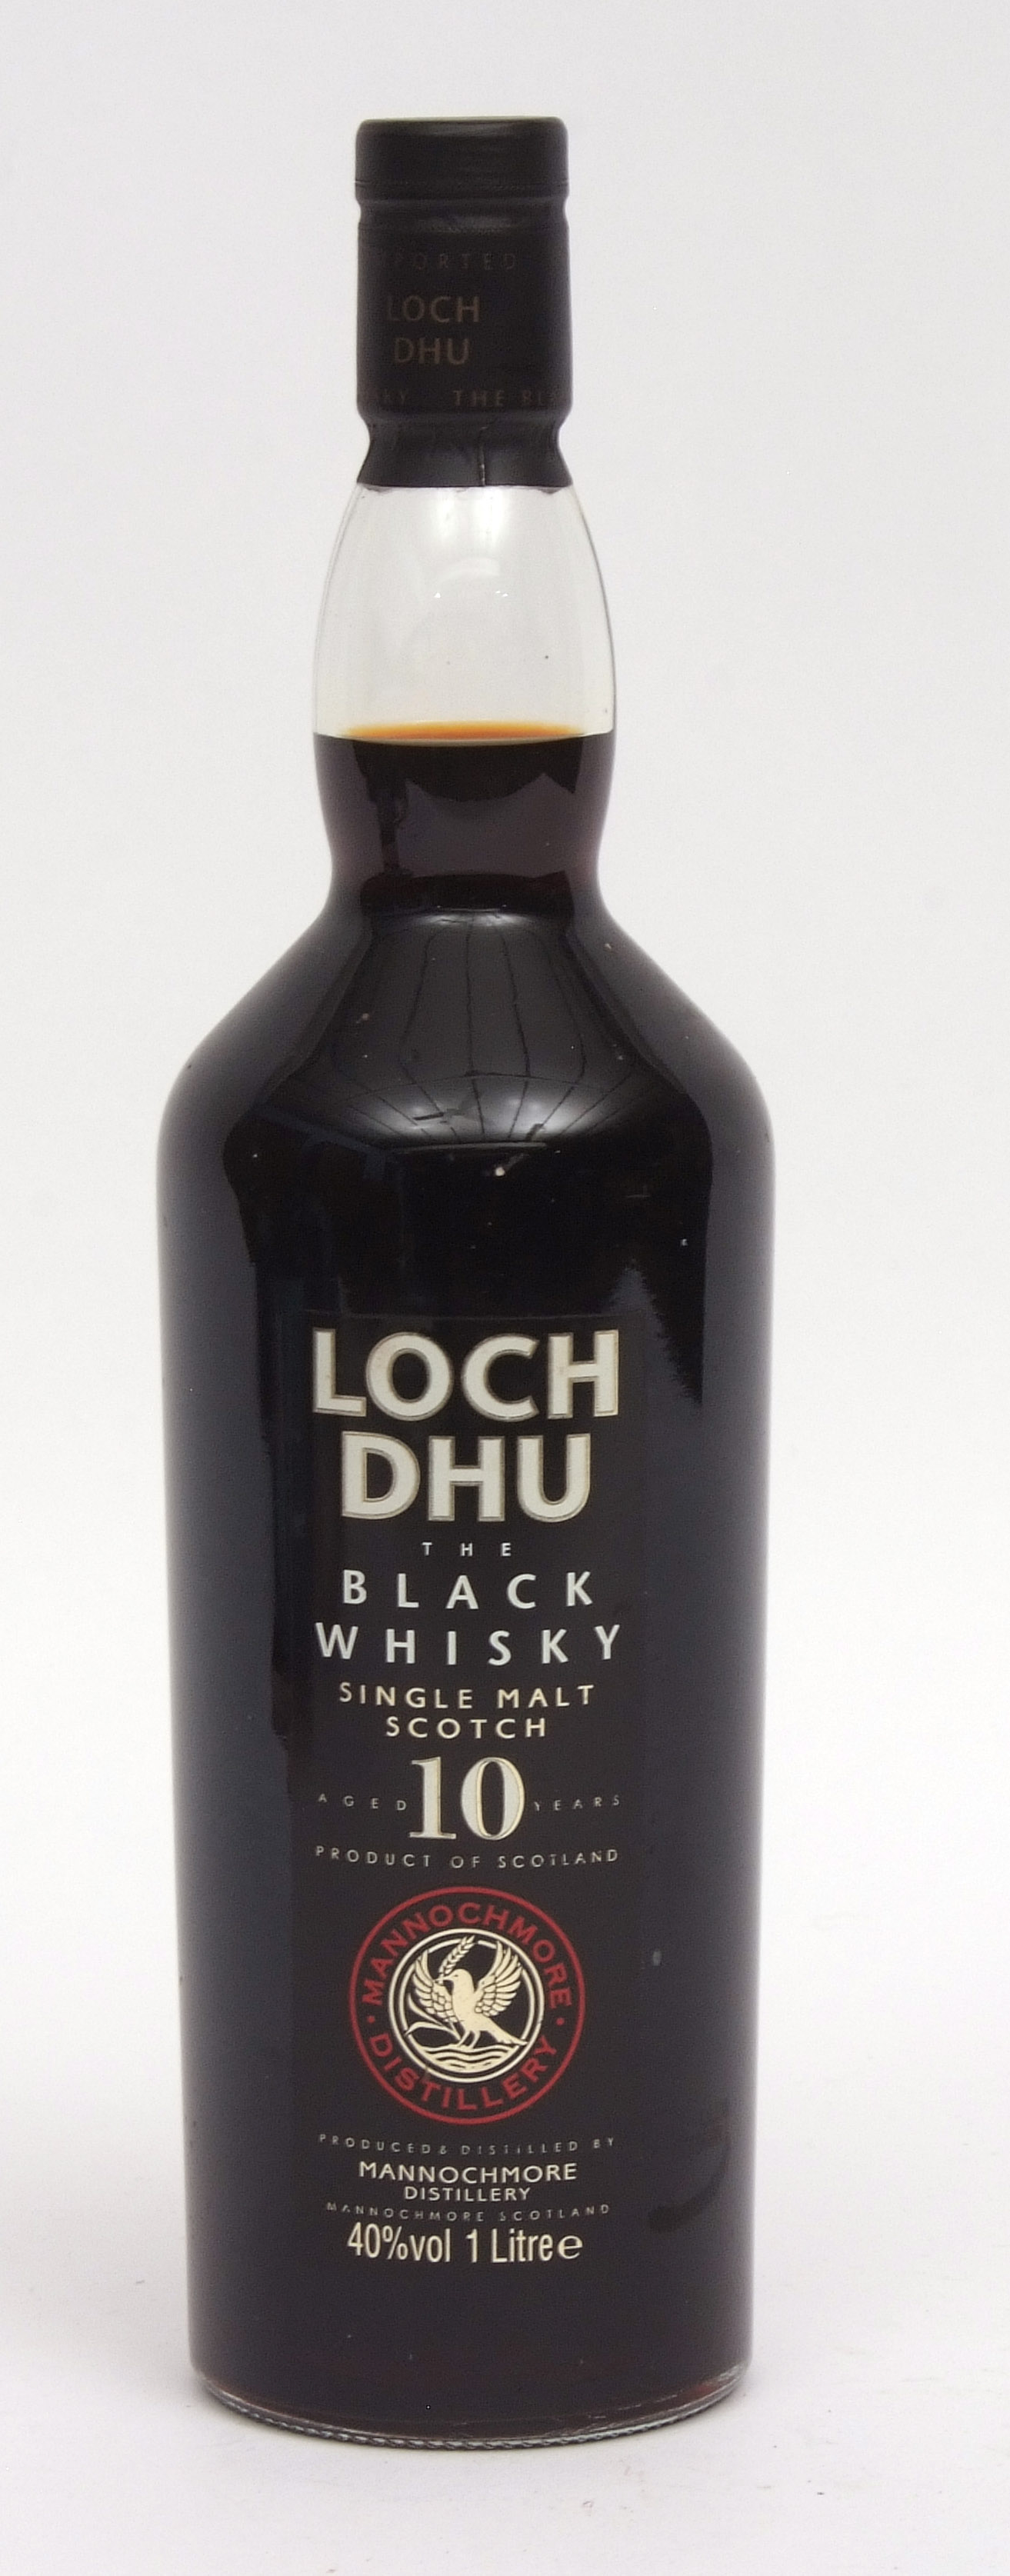 Loch Dhu "The Black Whisky" single malt Scotch Whisky, aged 10 years, (Mannochmore Distillery), 1